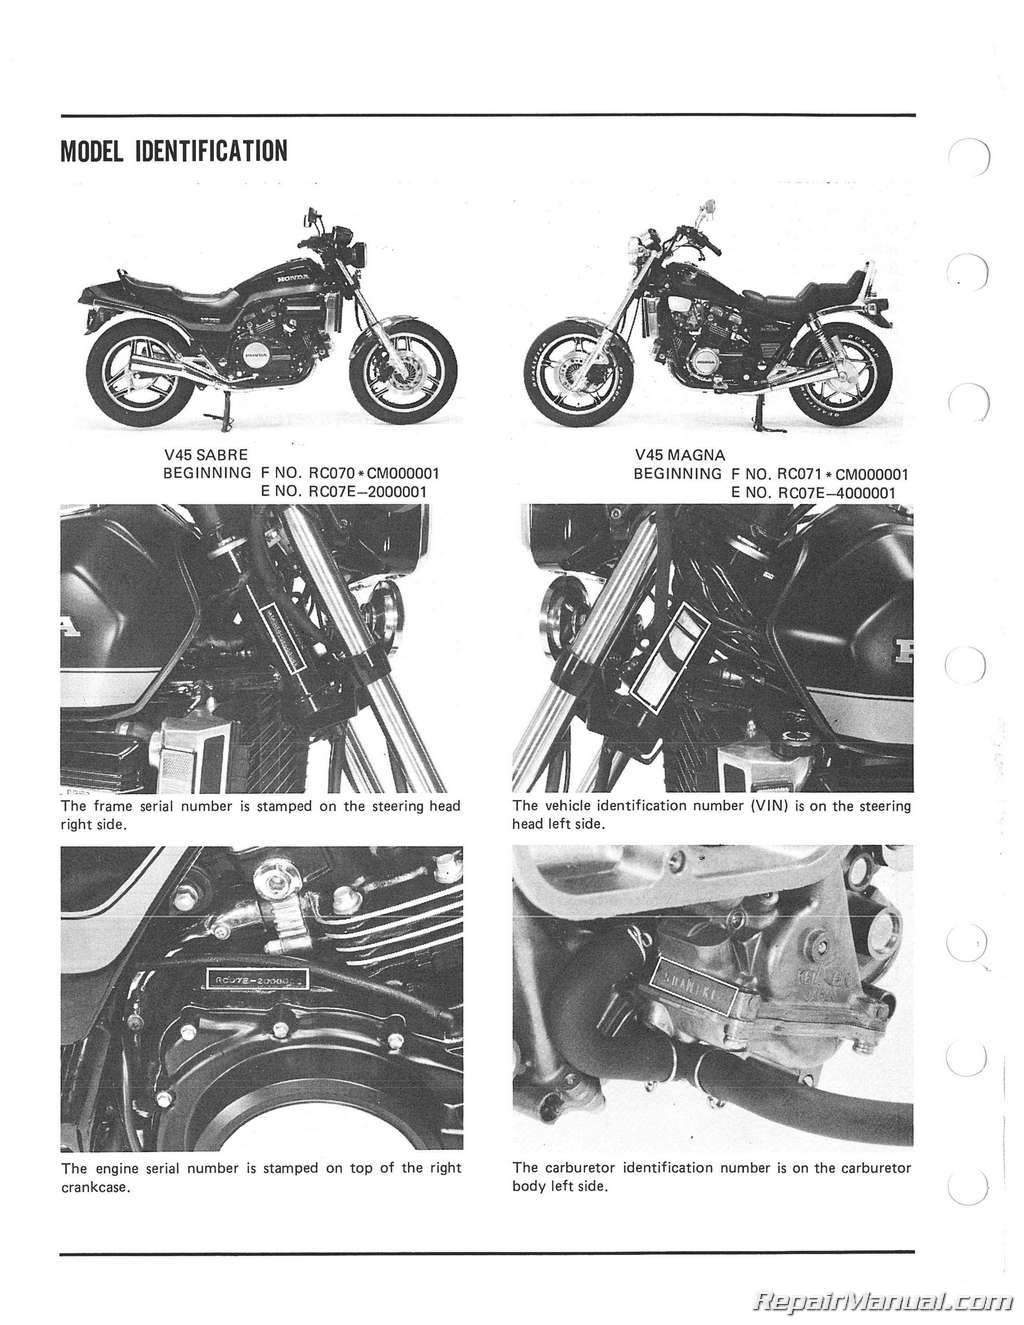 1984 Honda magna vf700c manual #7